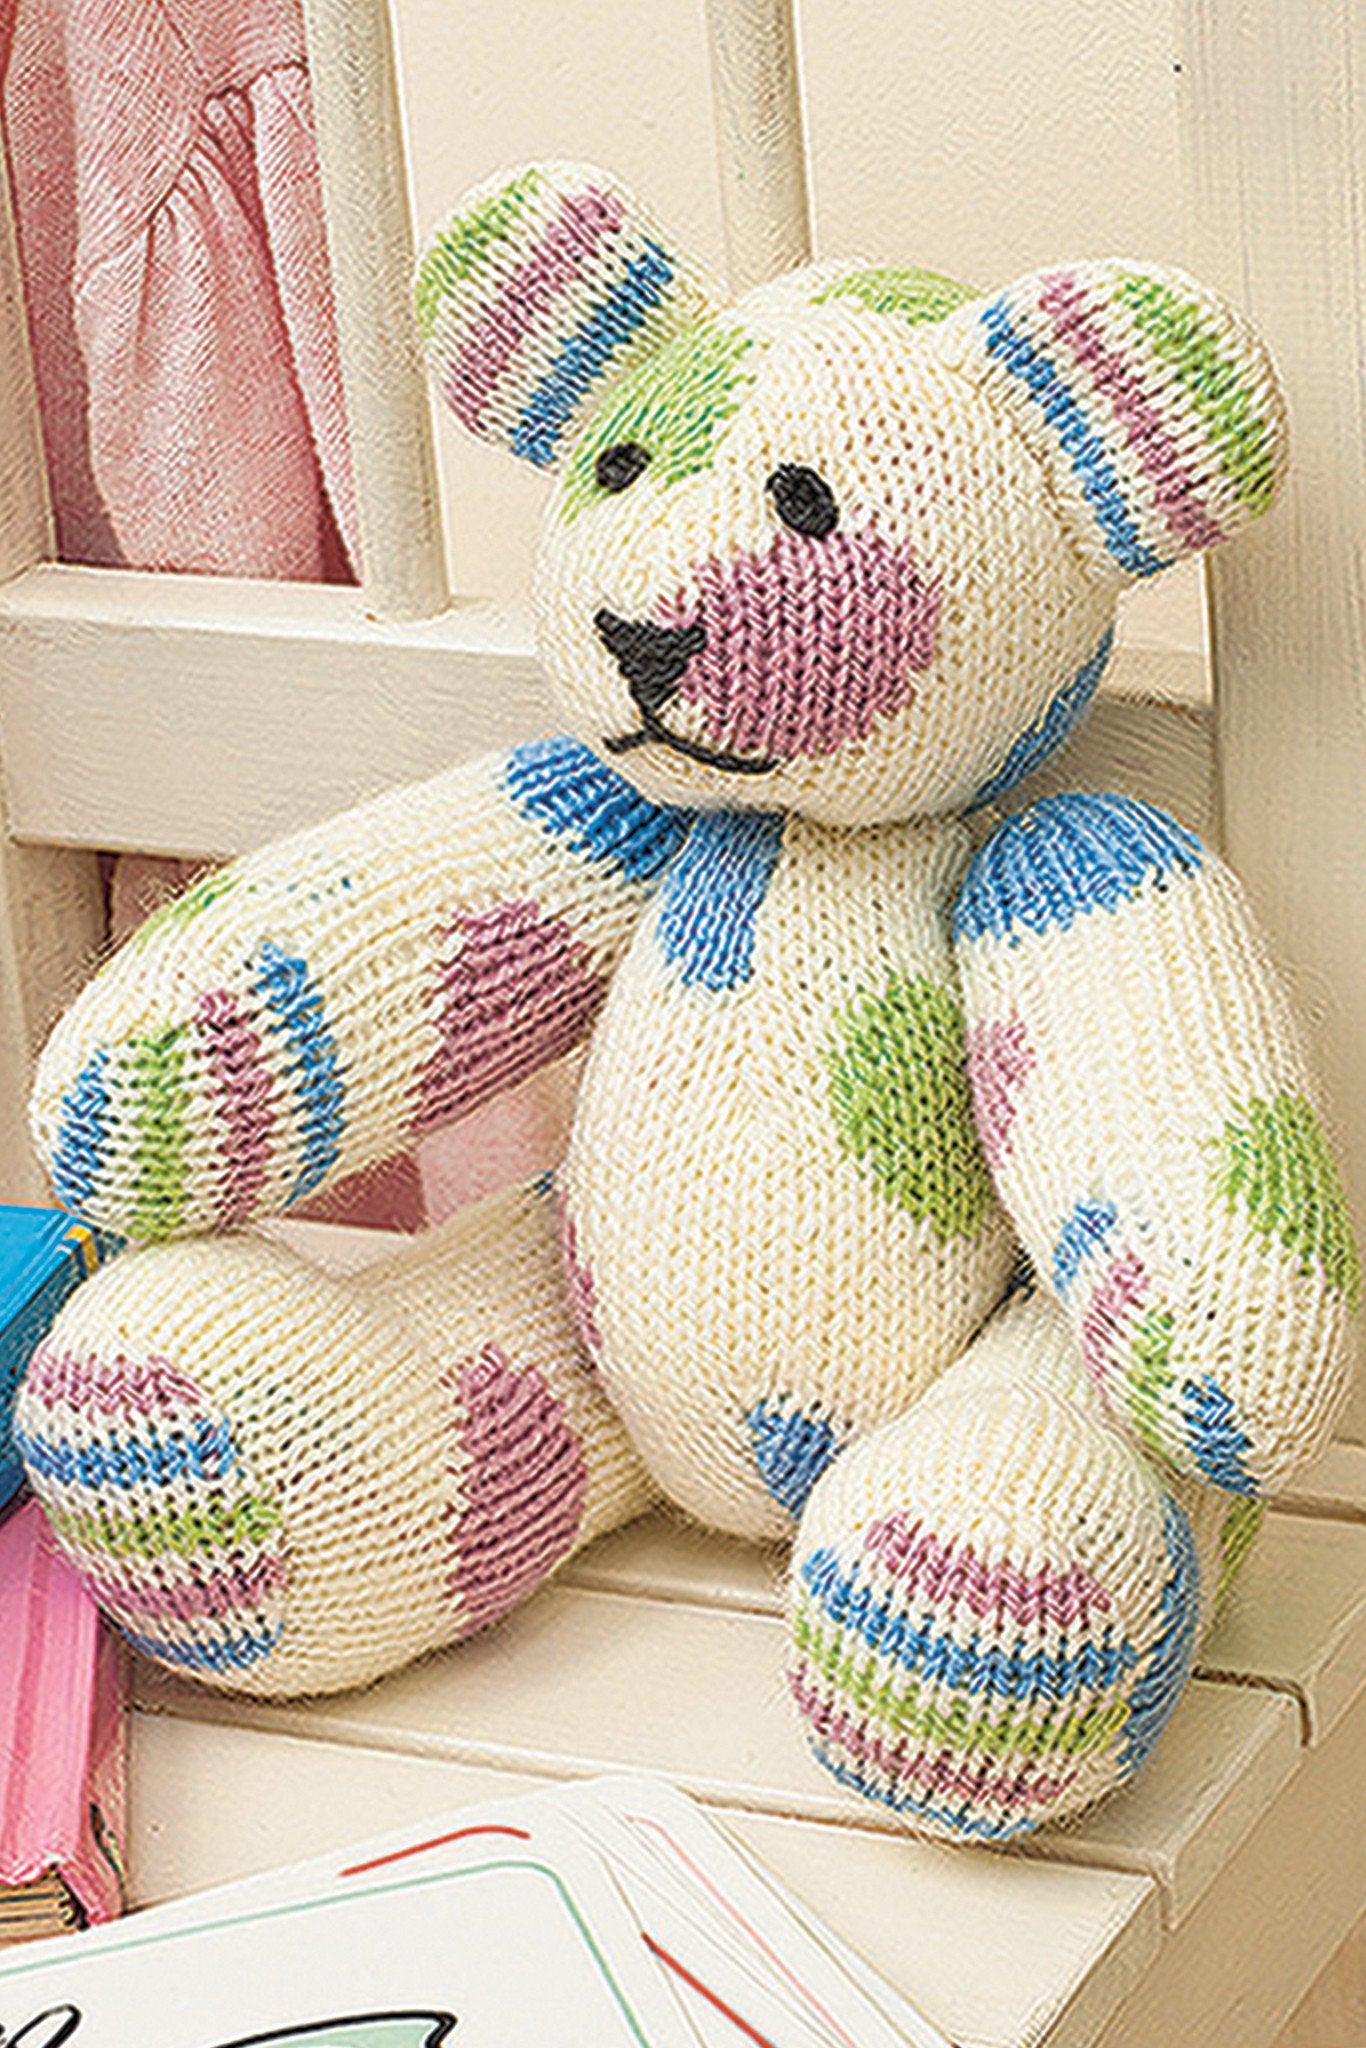 patterned-teddy-bear-make-knitting-pattern-the-knitting-network